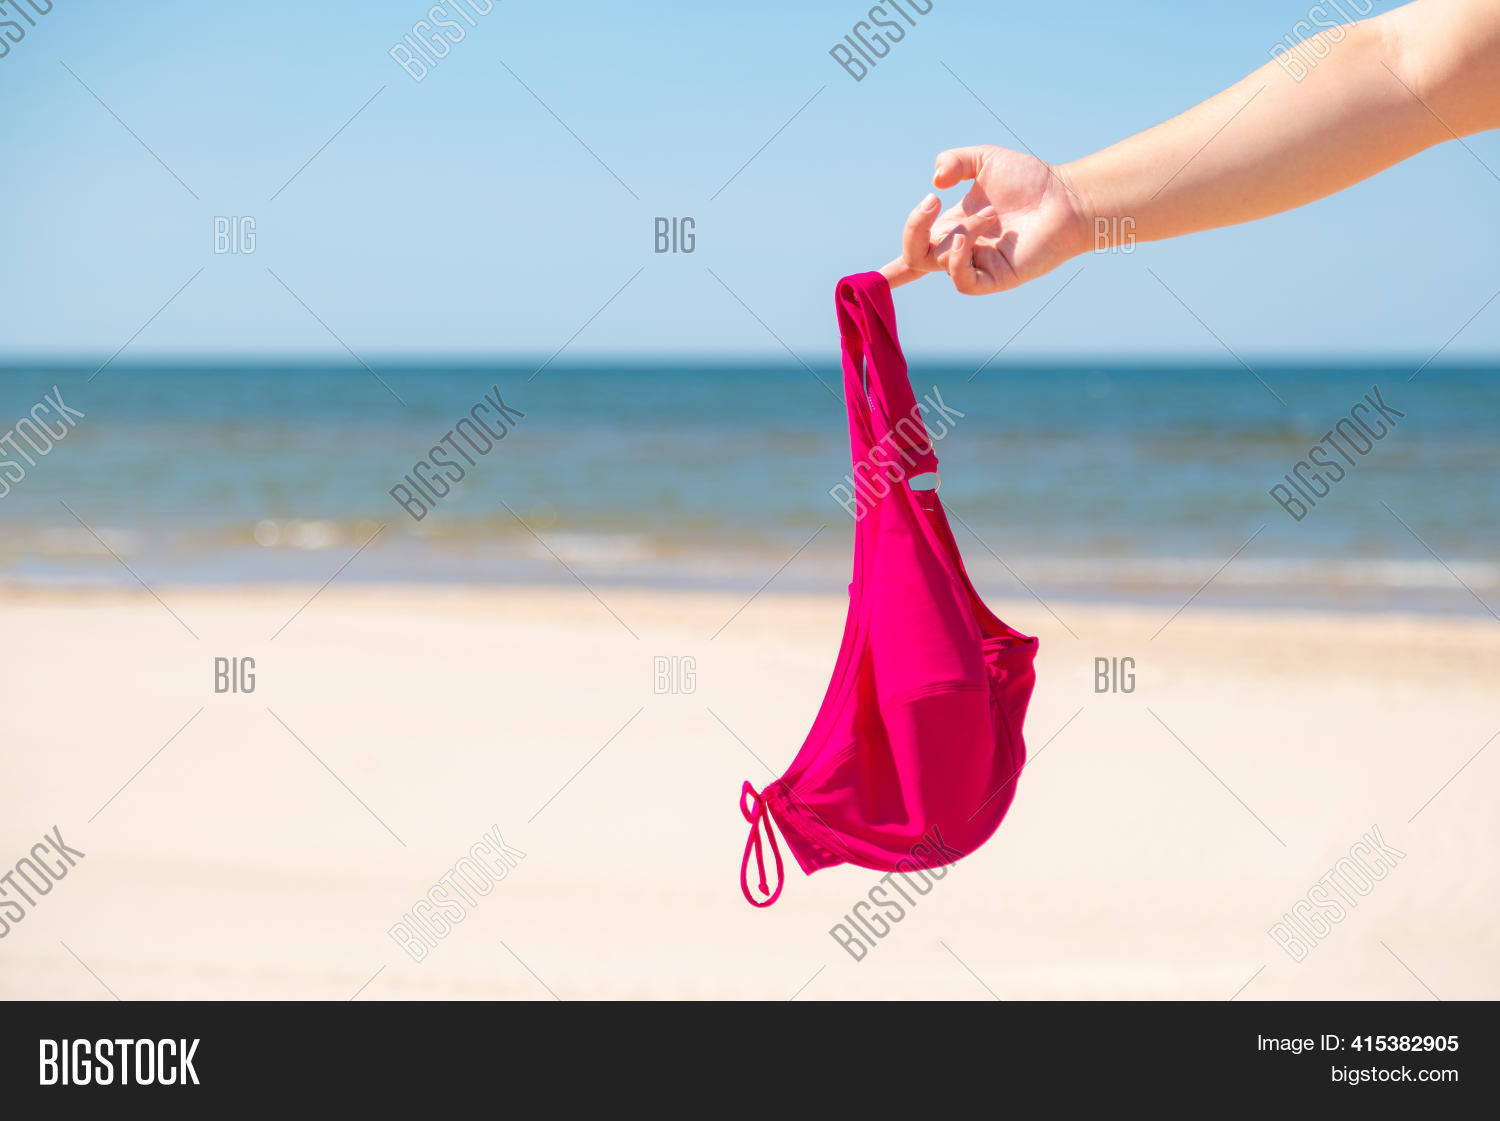 candy ang share free nude beach photos photos